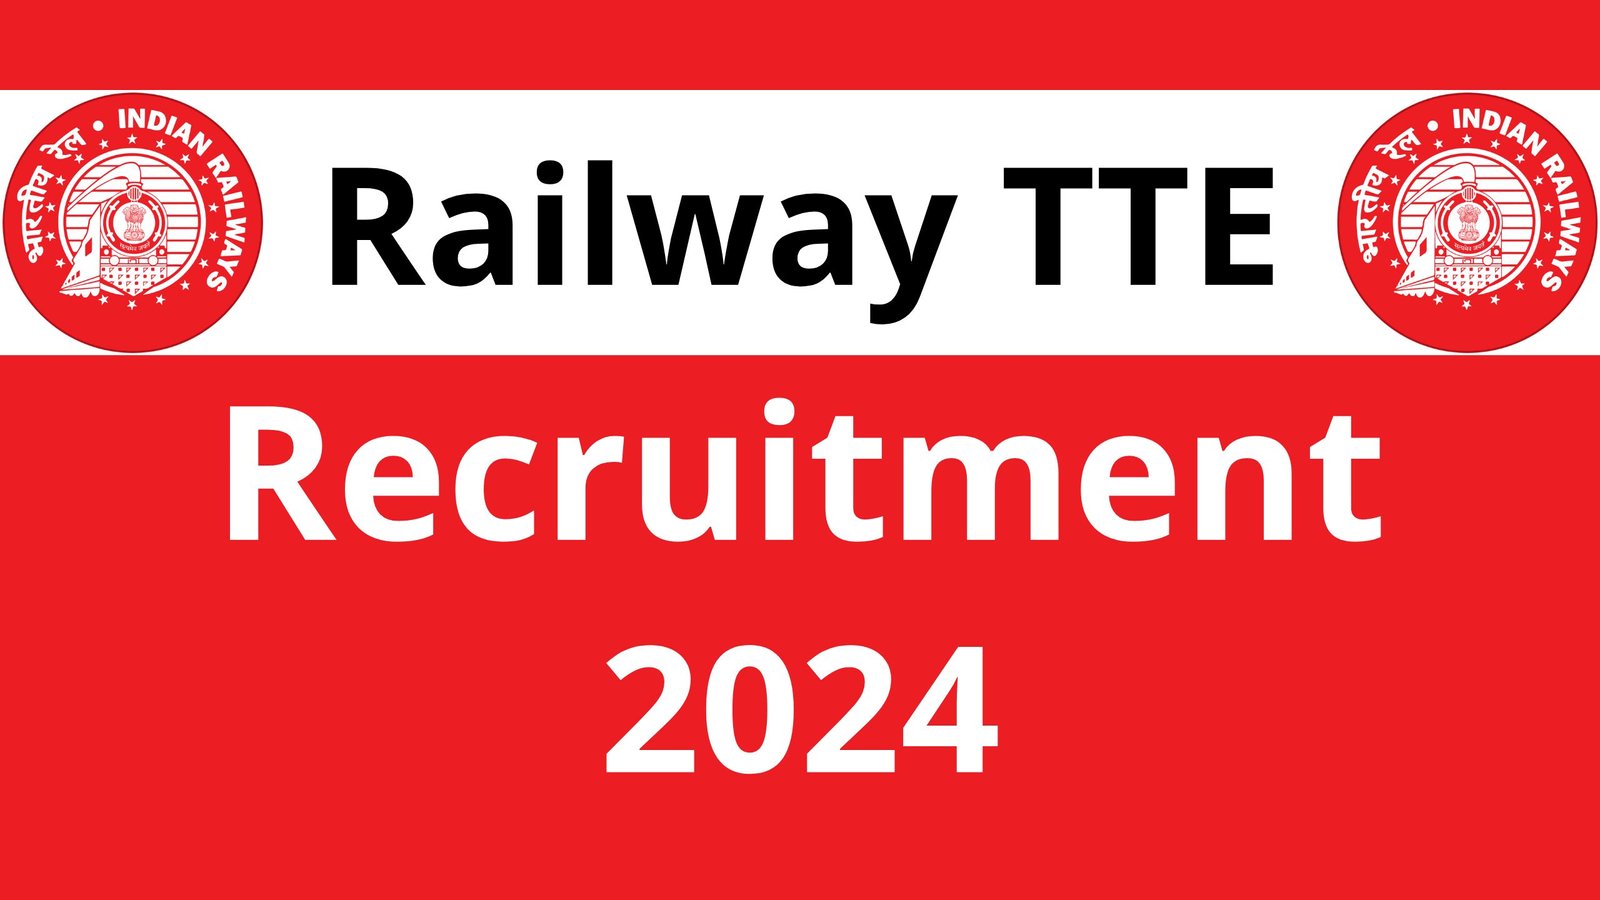 Railway TTE Recruitment 2024 Notification, Vacancy, Important Dates, Apply Link